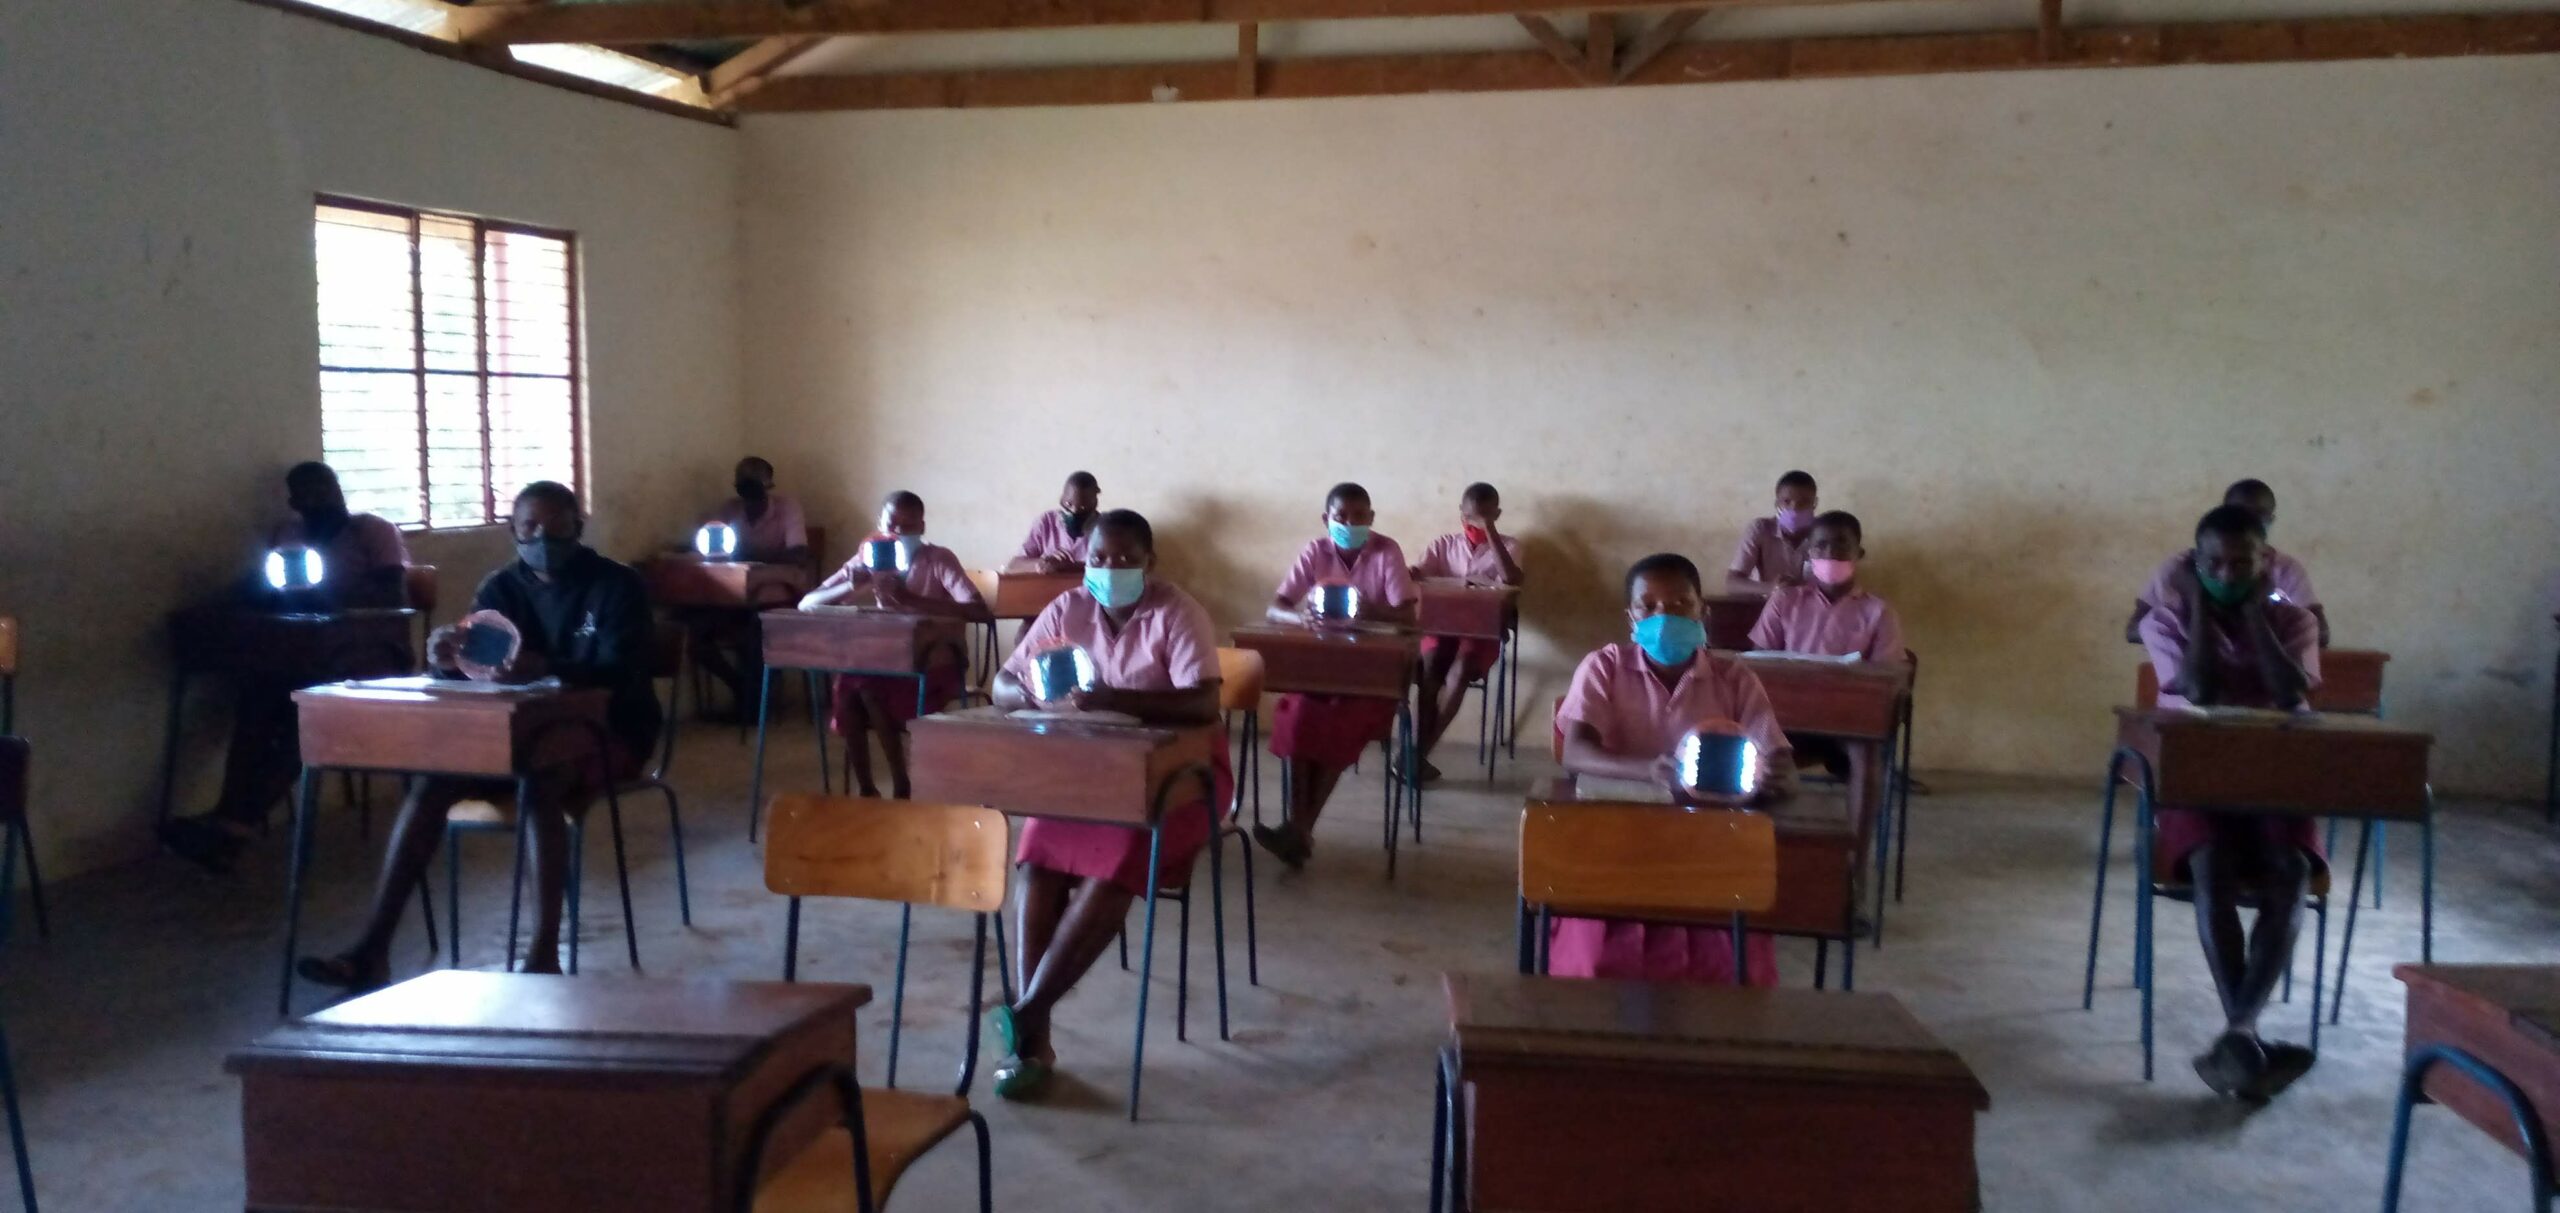 1469 Mwezi lights given, 55 schools visited